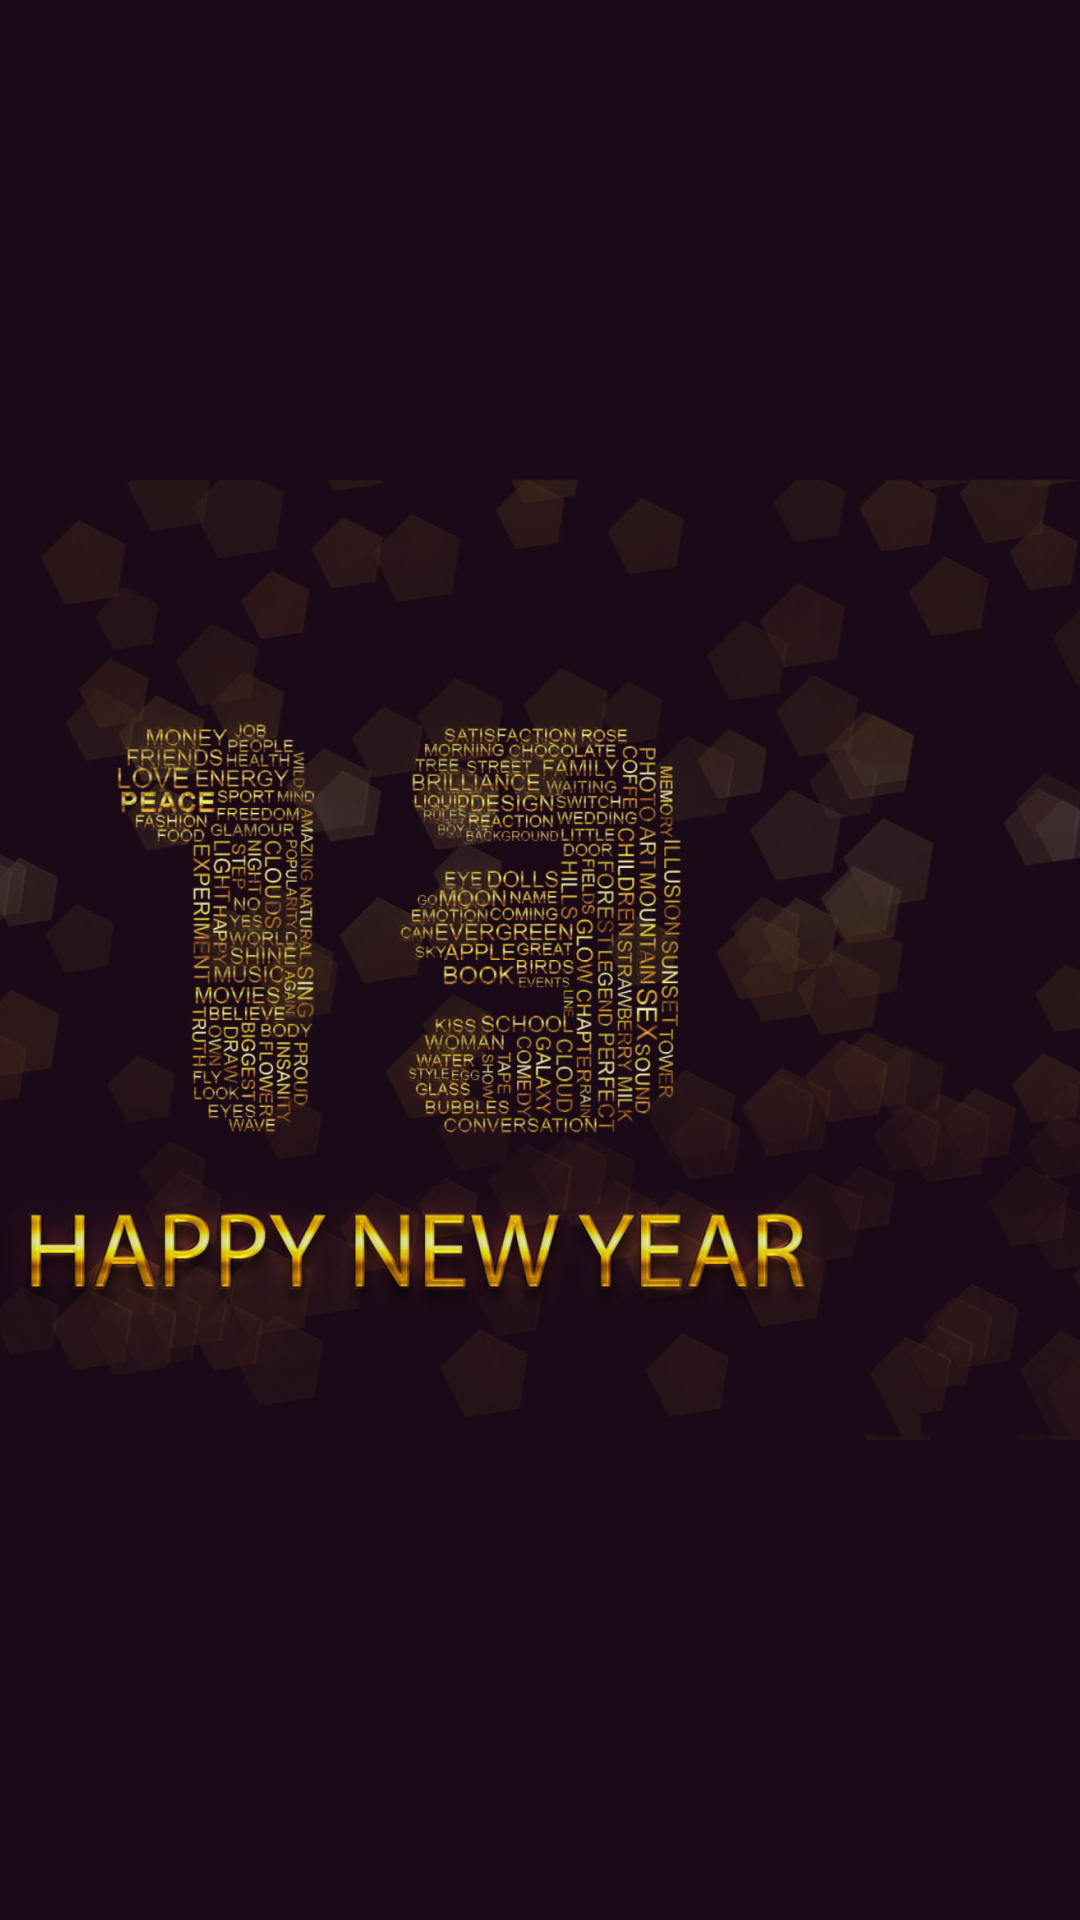 Happy New Year 2013 wallpaper 1080x1920